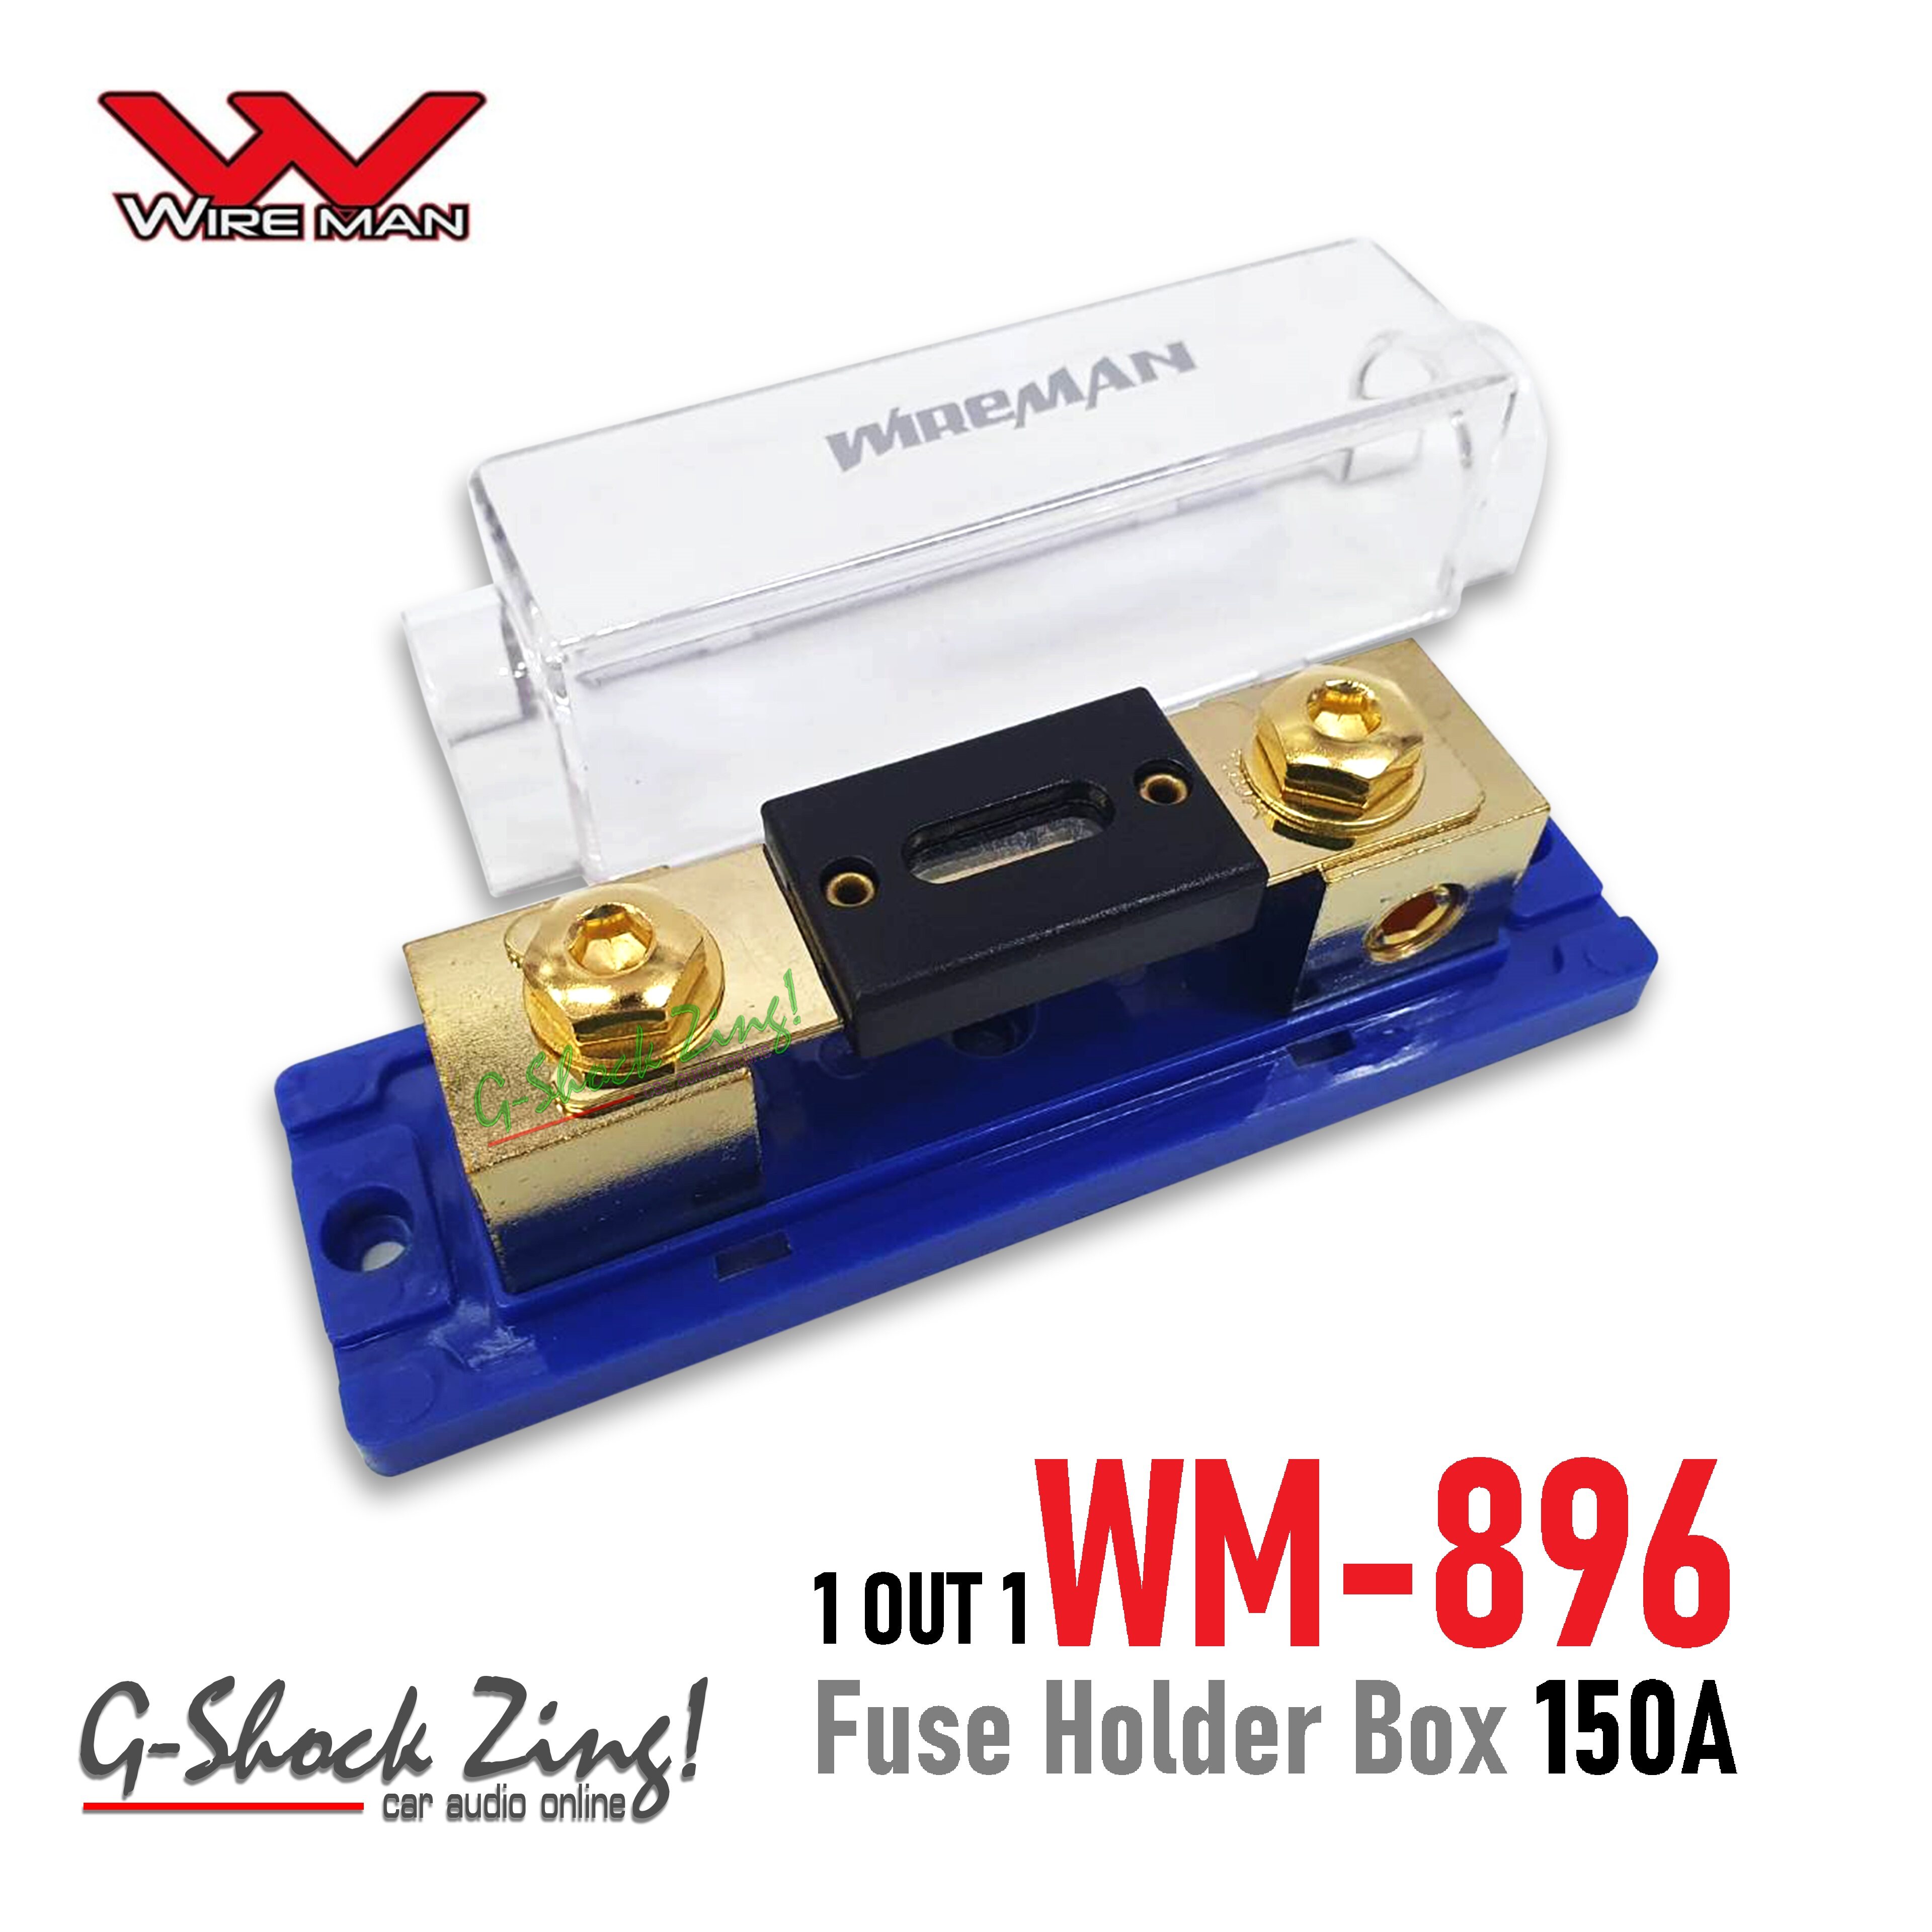 WIREMAN FUSE HOLDER BOX กล่องฟิวส์ เข้า 1ออก1 สำหรับสายแบตขนาดใหญ่ เครื่องเสียงรถยนต์ พร้อมฟิวส์ กล้ามปู 150Aแอมป์(เข้า 1ออก 1)  WIREMAN รุ่น WM-896